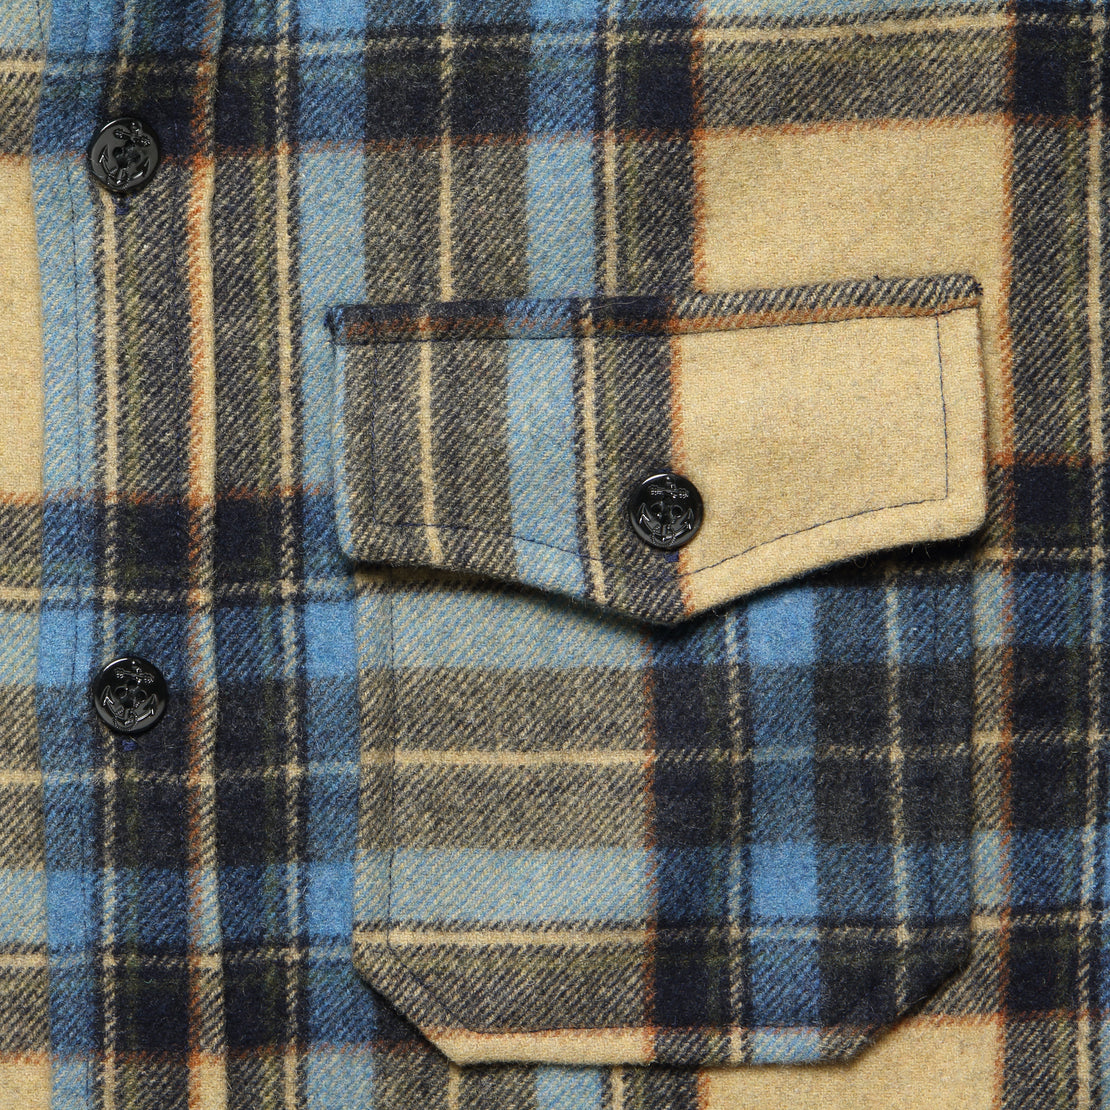 CPO Wool Shirt - Blue/Tan Plaid - Schott - STAG Provisions - Tops - L/S Woven - Overshirt